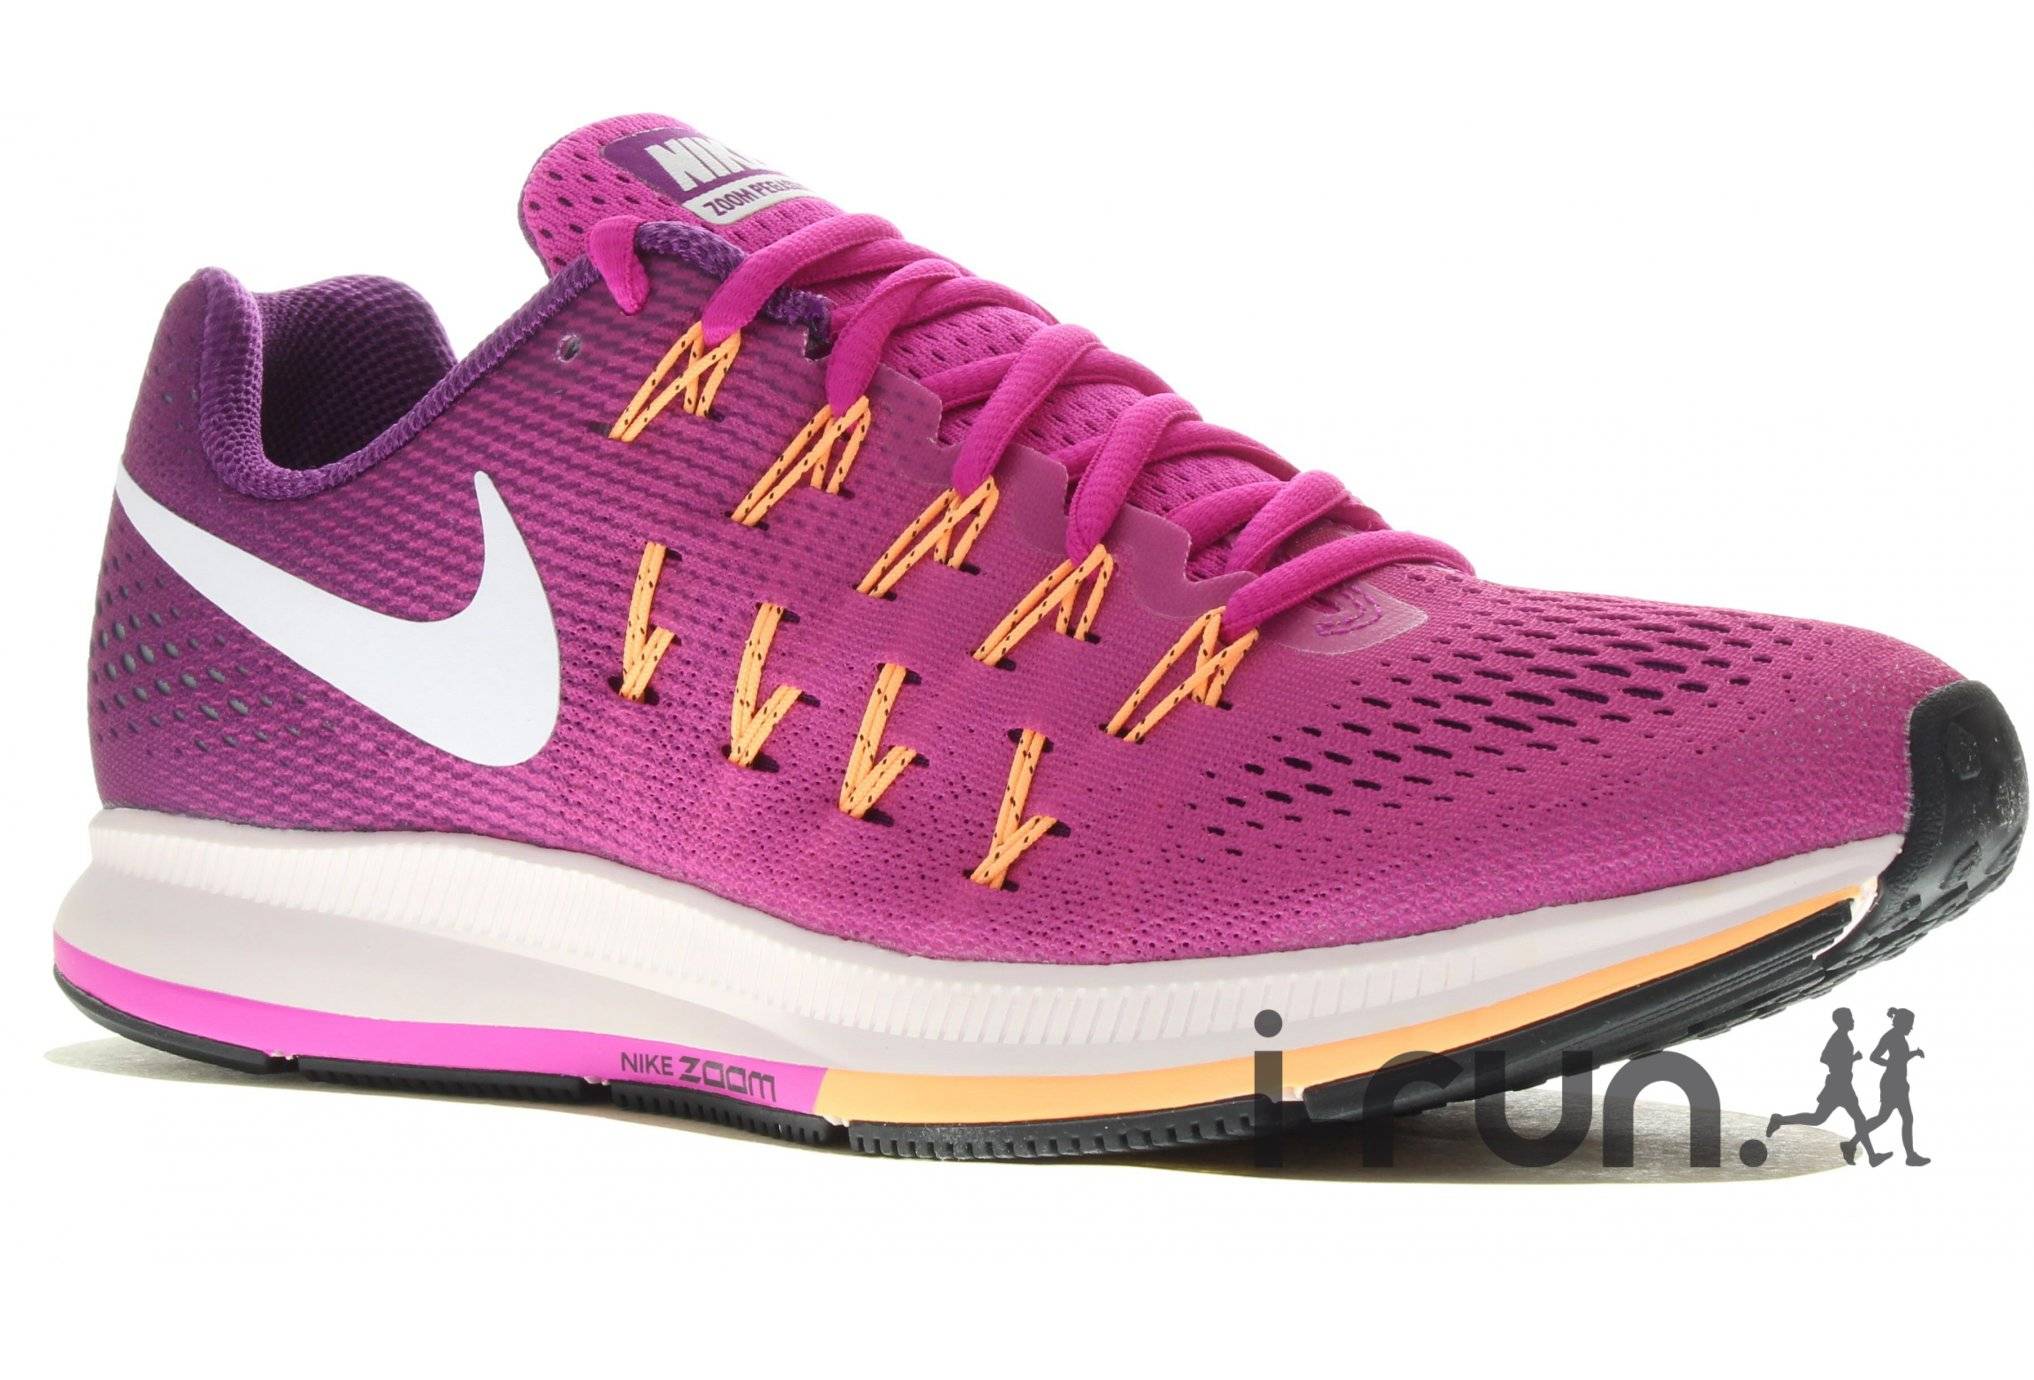 Nike Air Zoom Pegasus 33 femme : infos, avis et meilleur prix. Chaussures  running trail femme.